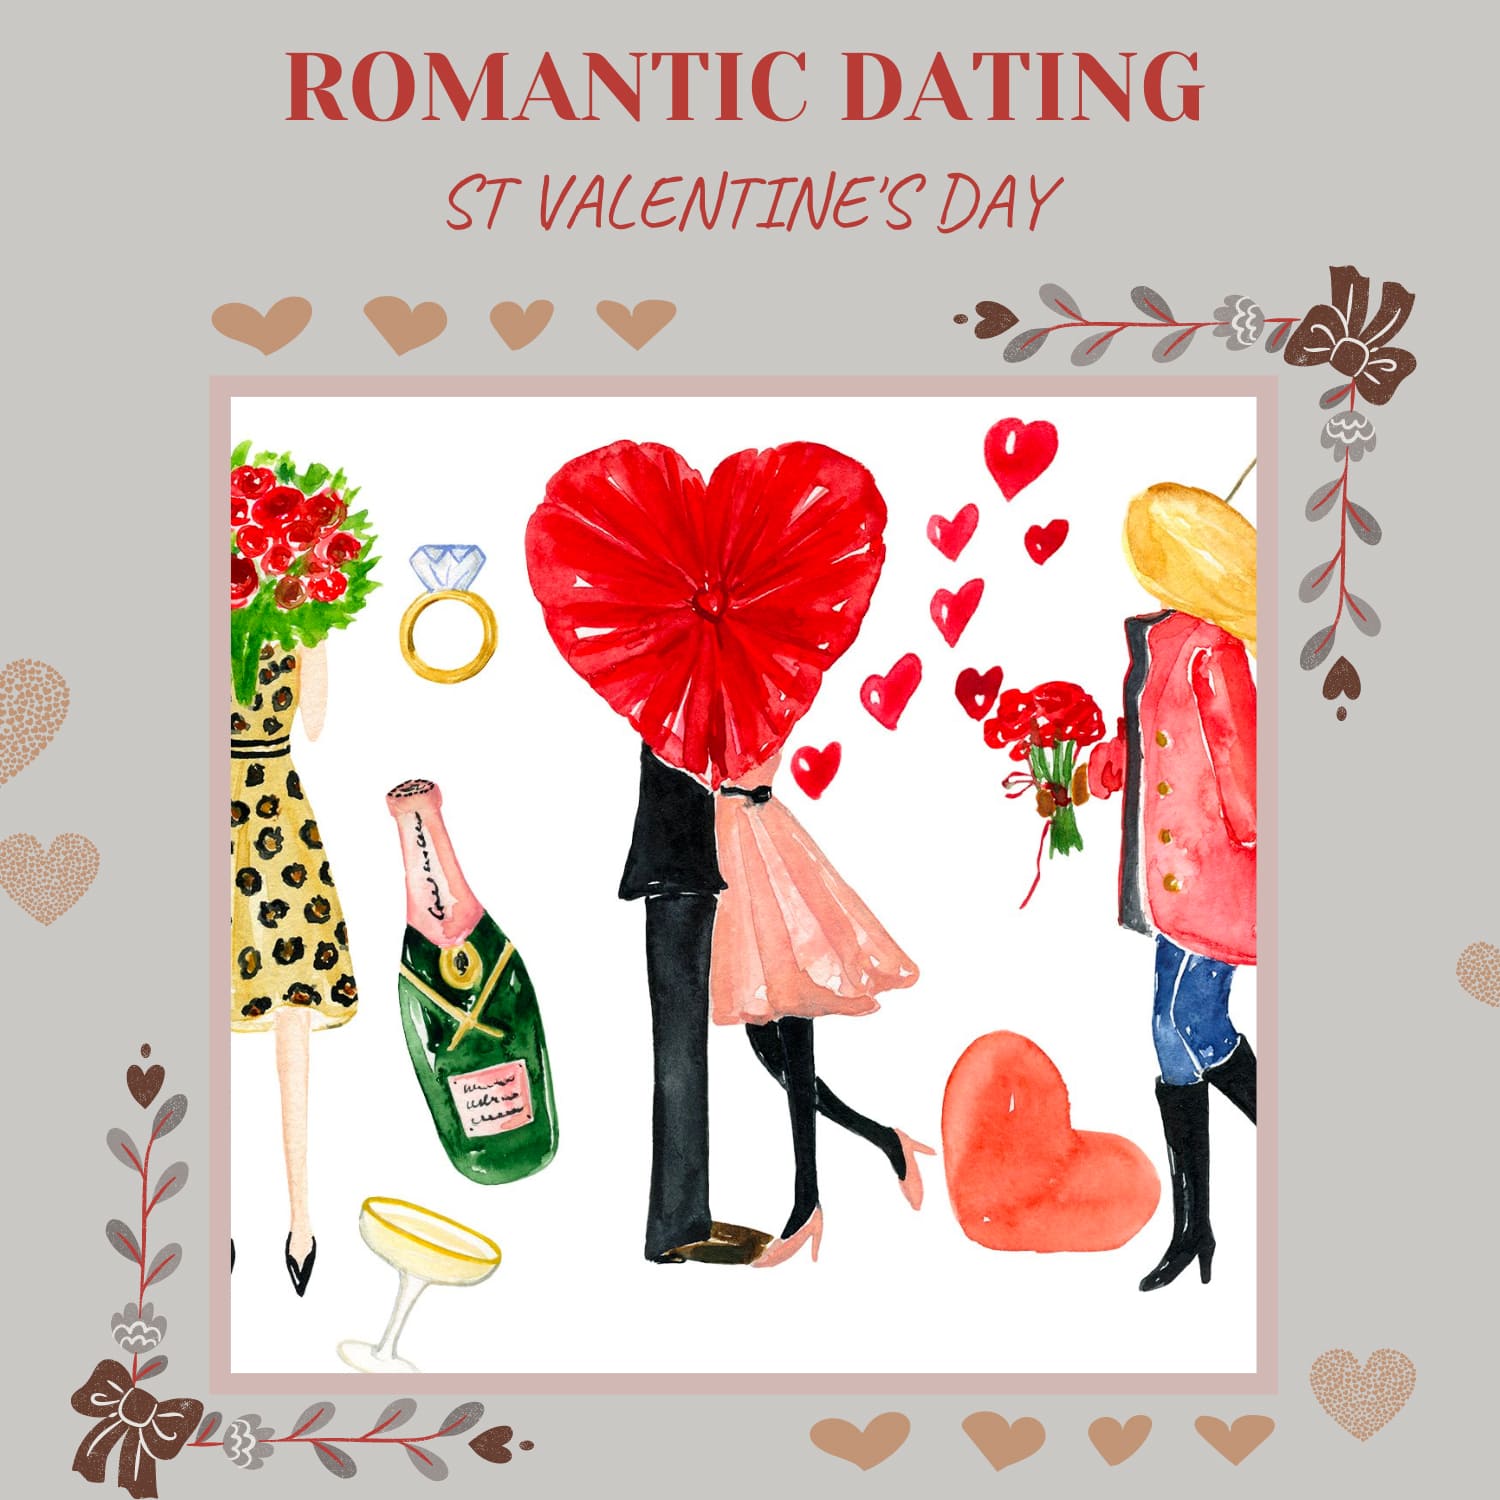 Romantic Dating. St Valentine's Day.